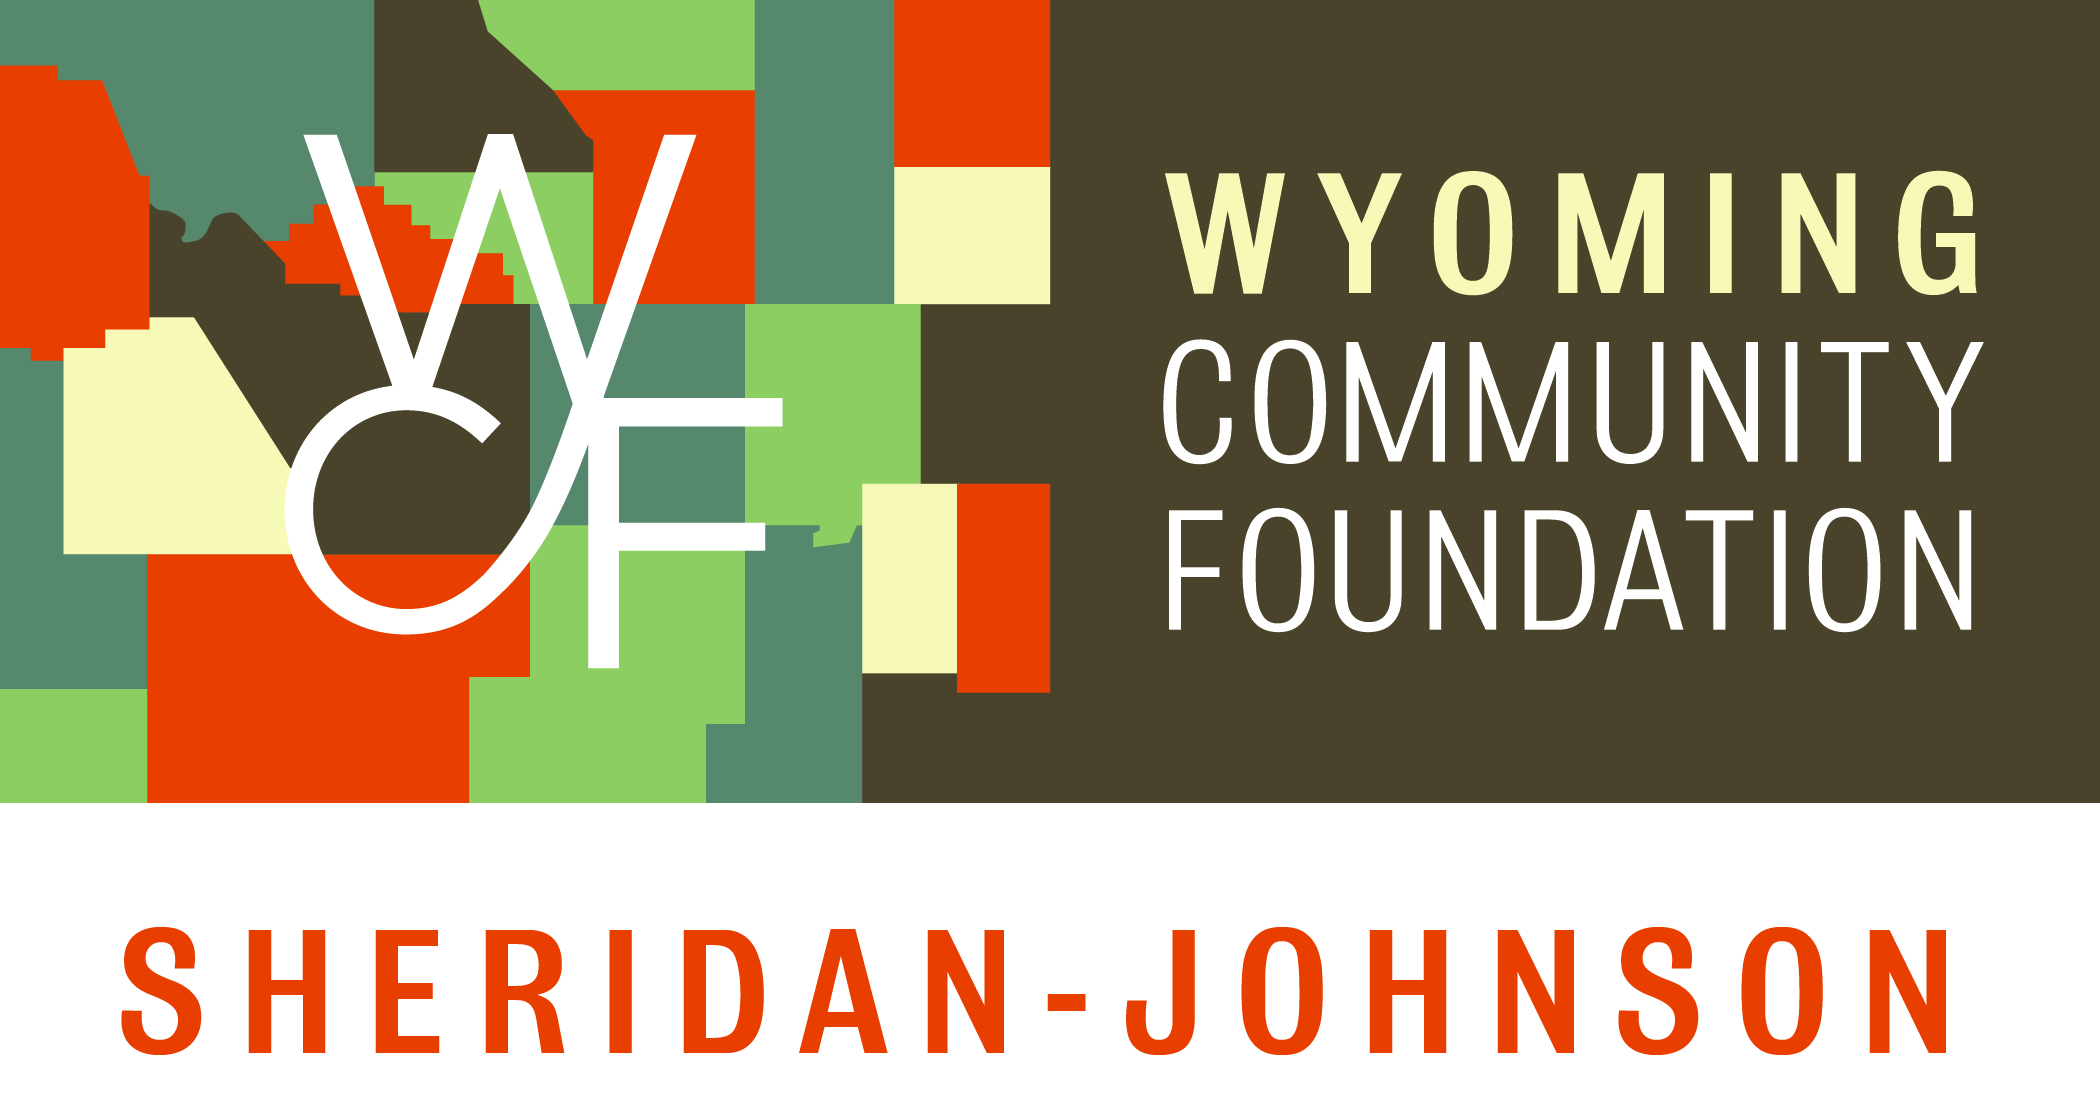 JC-FFF receives generous grant from WYCF.